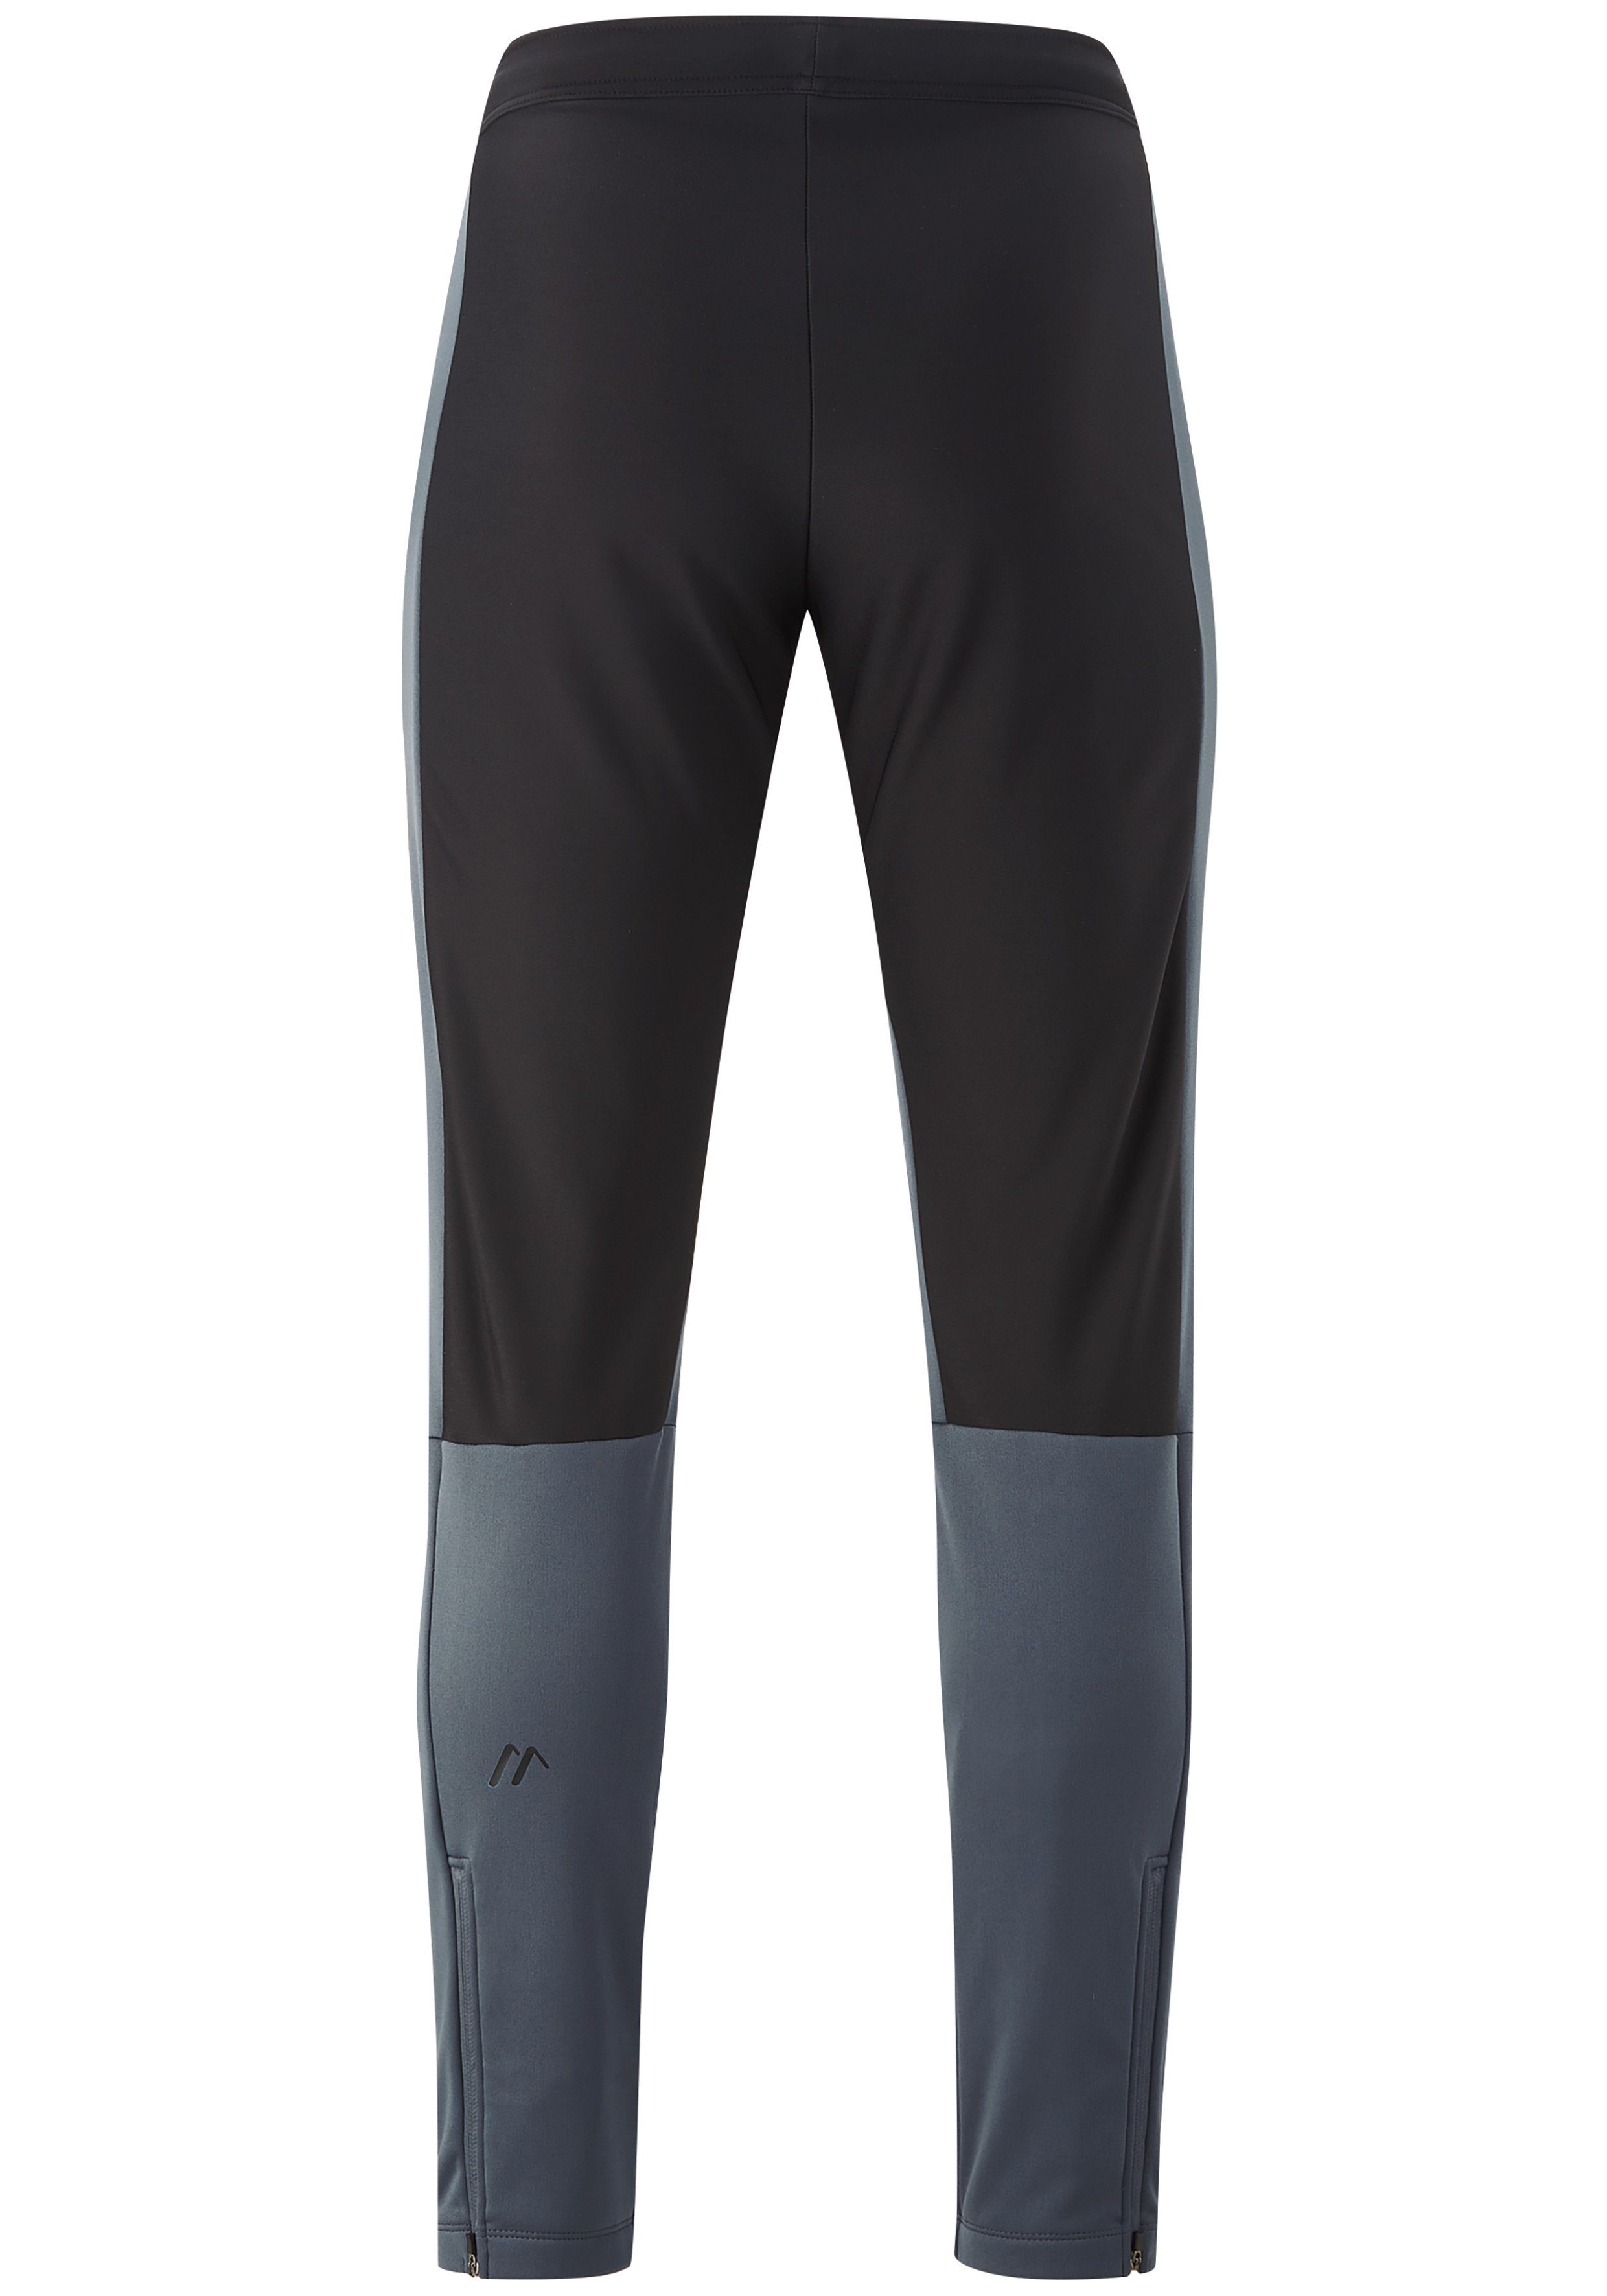 graublau Schnitt Malselv Maier Sports M komfortable Softshell-Hose Slim-Fit Pants in modernen Softshellhose